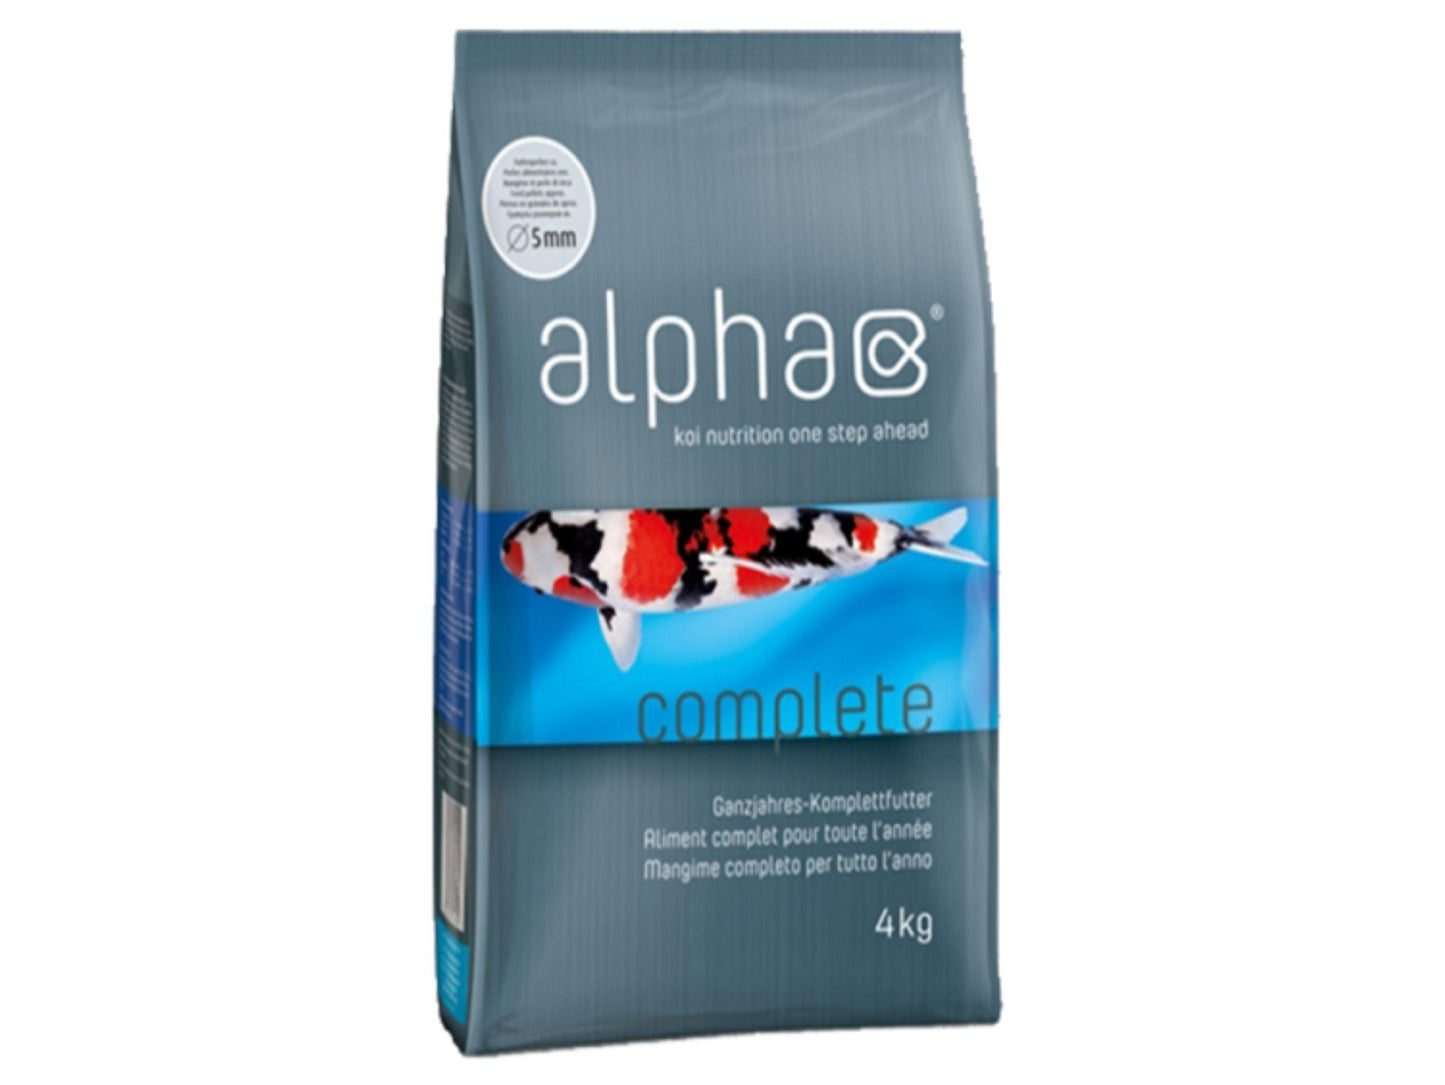 alpha complete - KENJI KOI Products